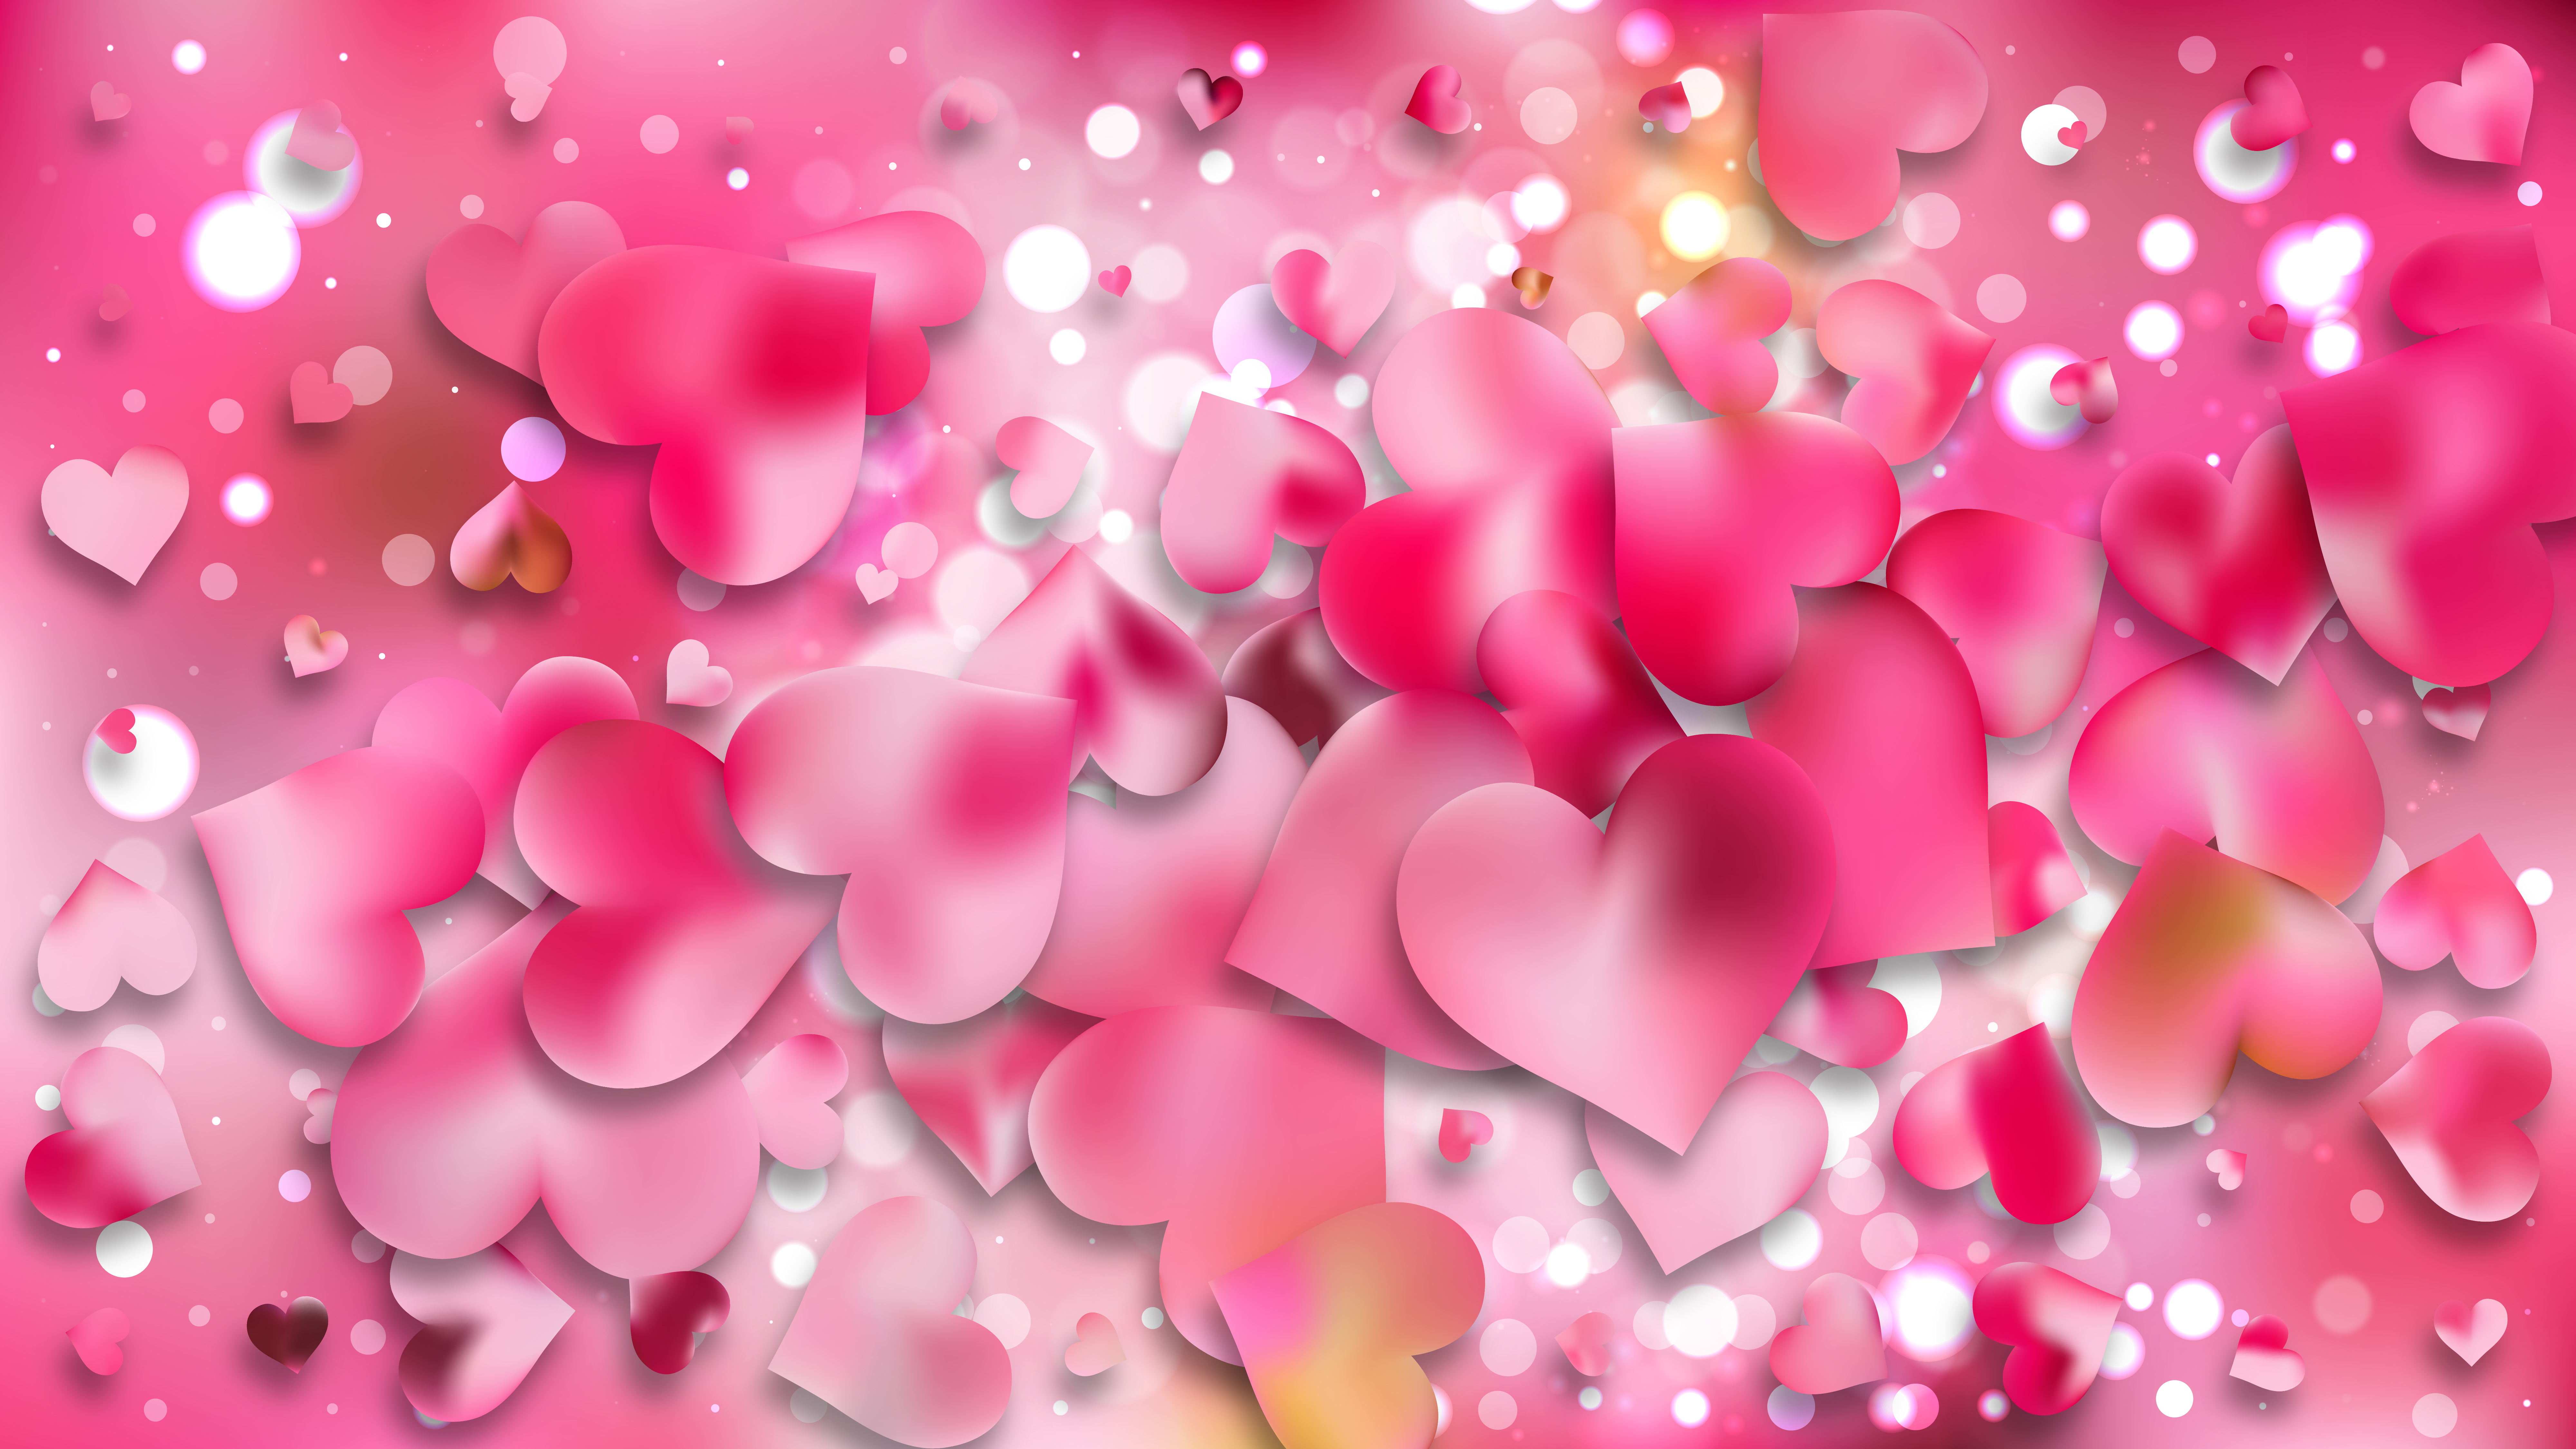 Pink Heart Wallpaper Background Vector Image - Pink With Heart Background -  8000x4500 Wallpaper 